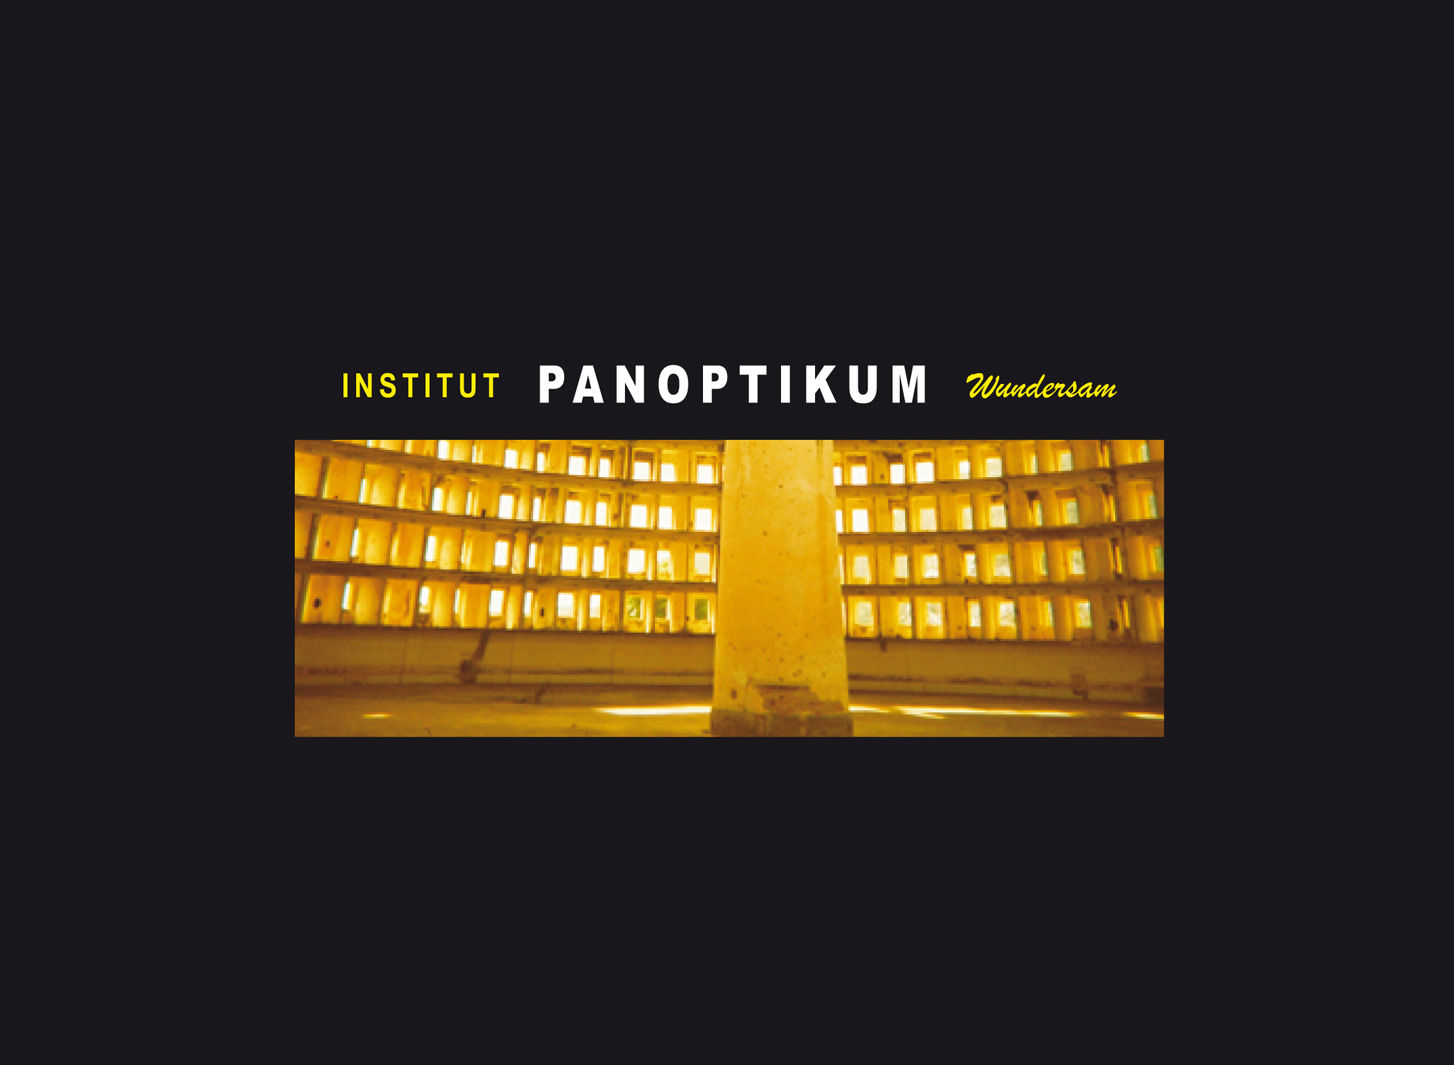 Institut PANOPTIKUM Gesamtwerkszenarium